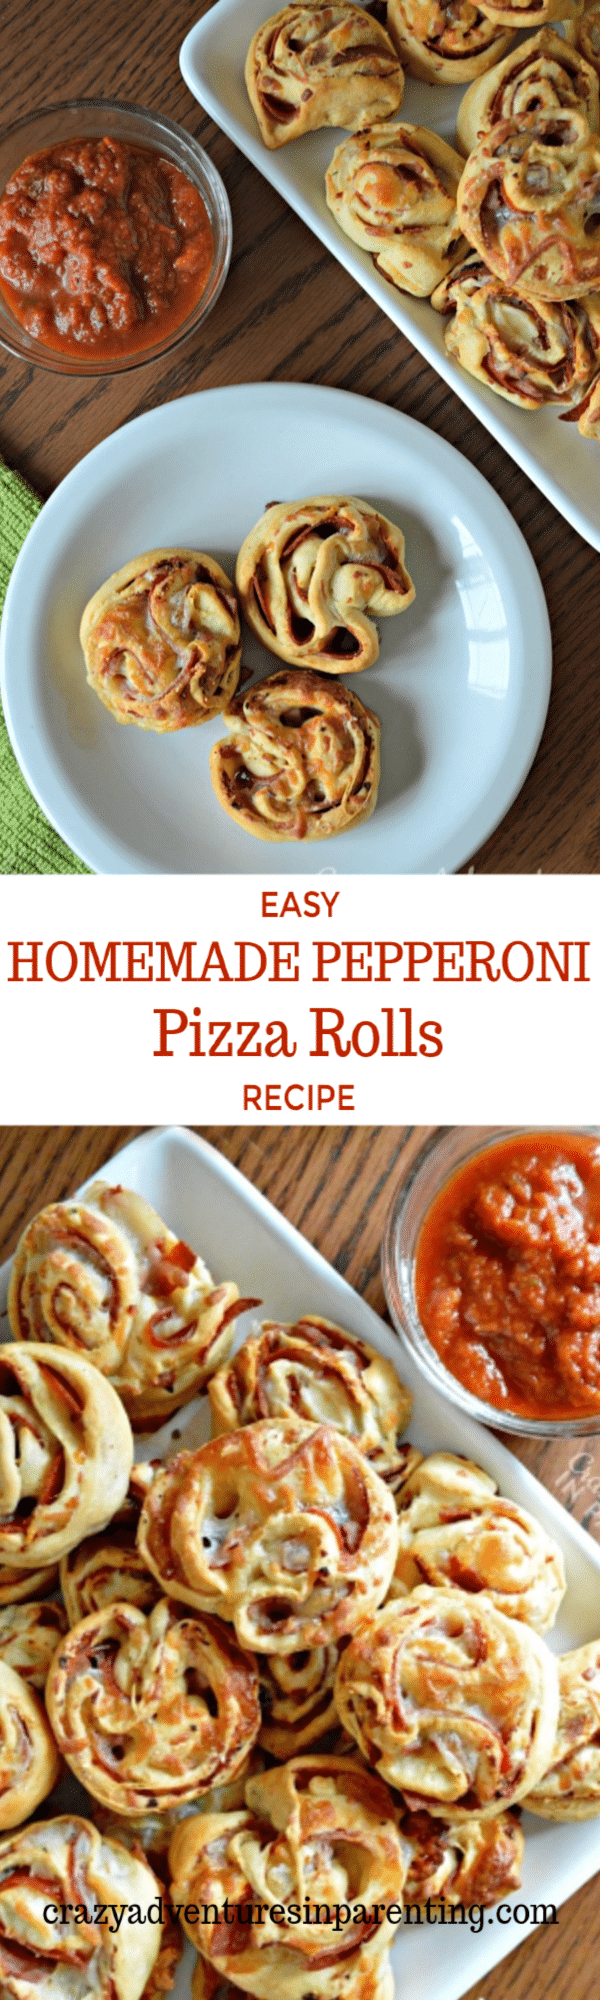 Easy Homemade Pepperoni Pizza Rolls Recipe